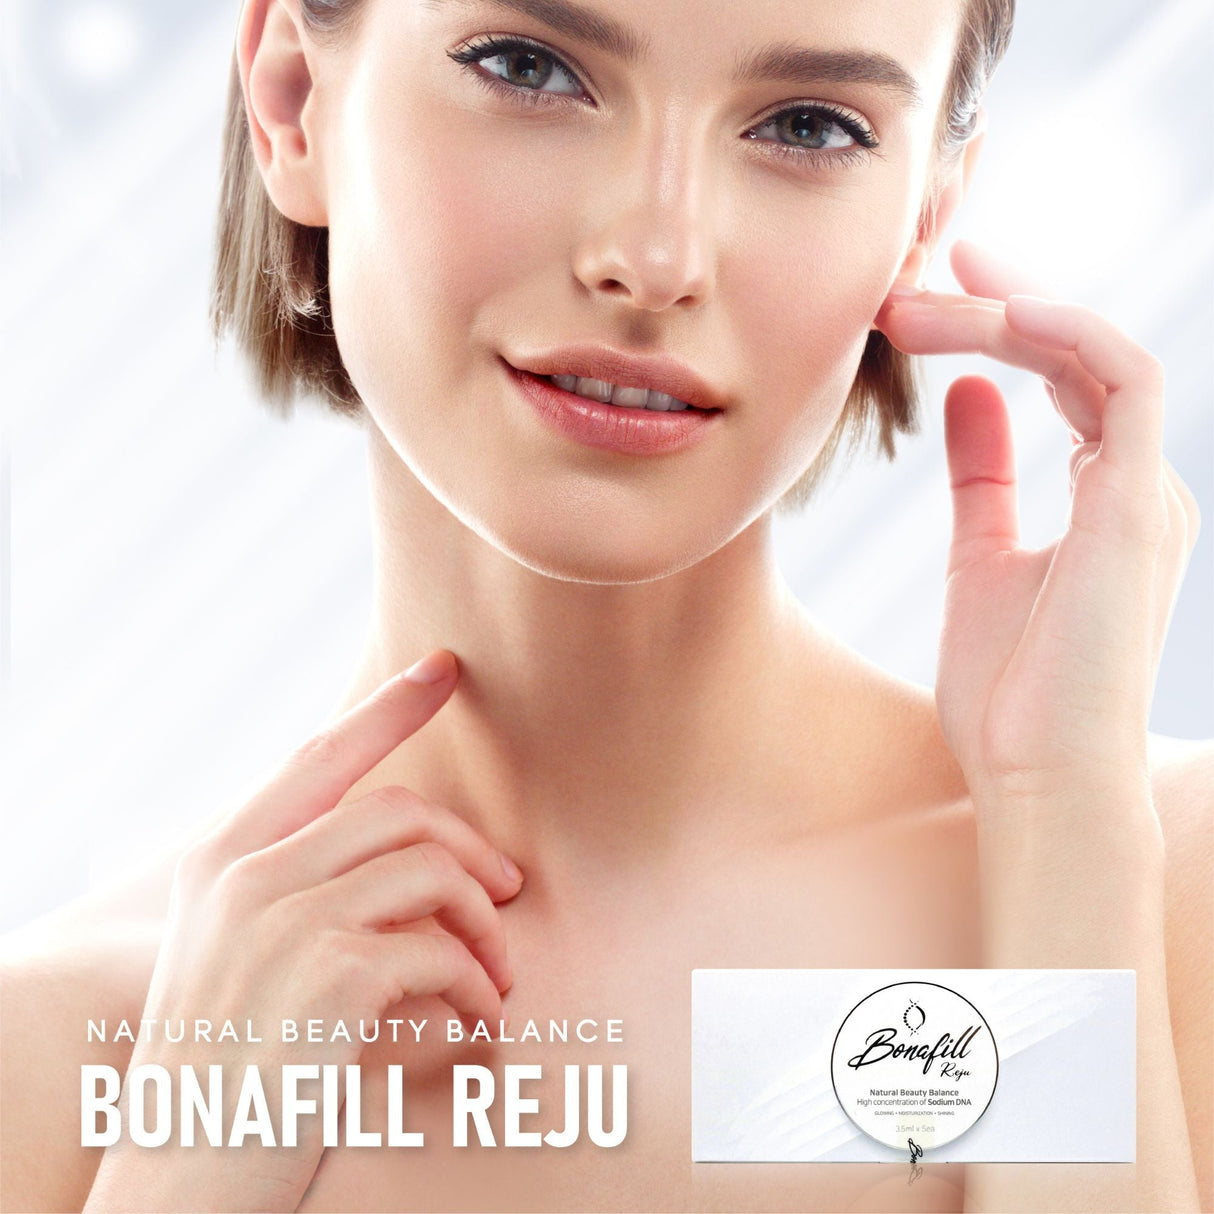 Bonafill Reju - Filler Lux™ - Mesotherapy - Let It beauty Co., Ltd.